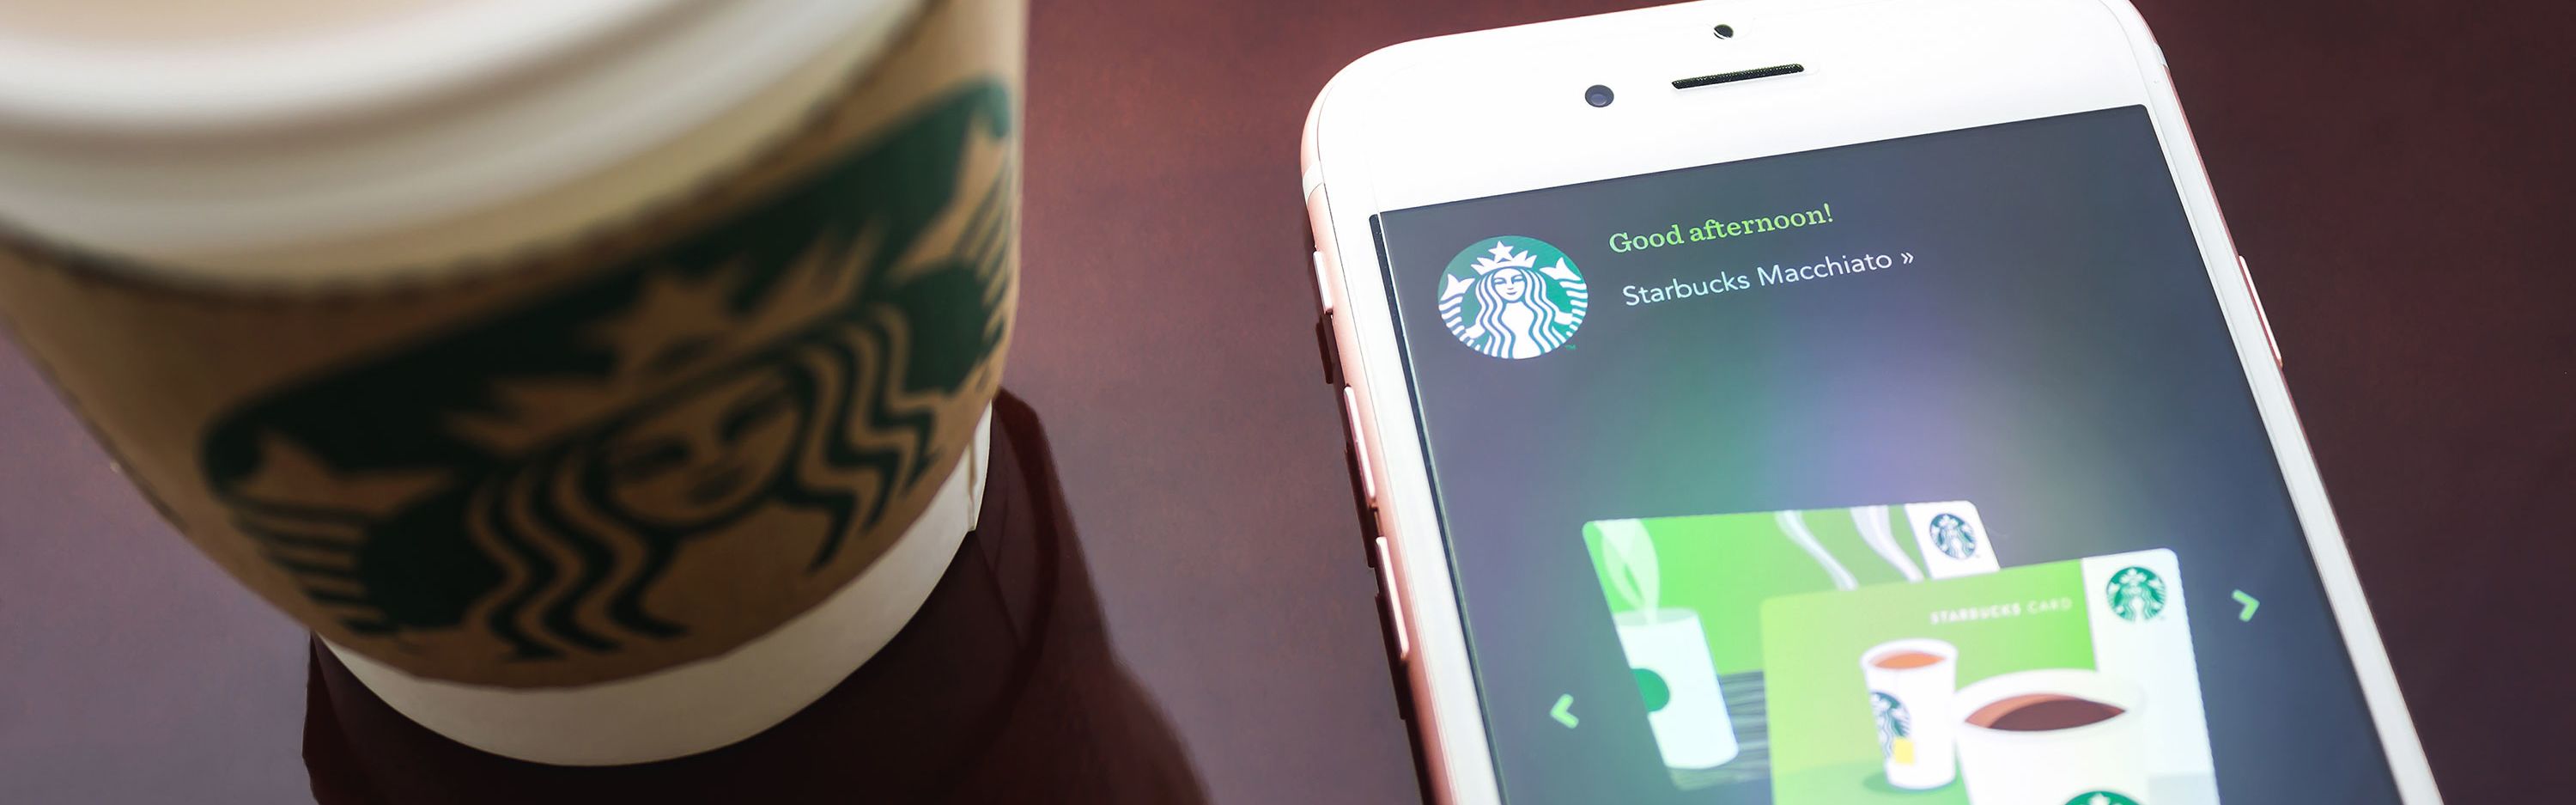 Starbucks Says Over $1 Billion Is Sitting on Gift Cards